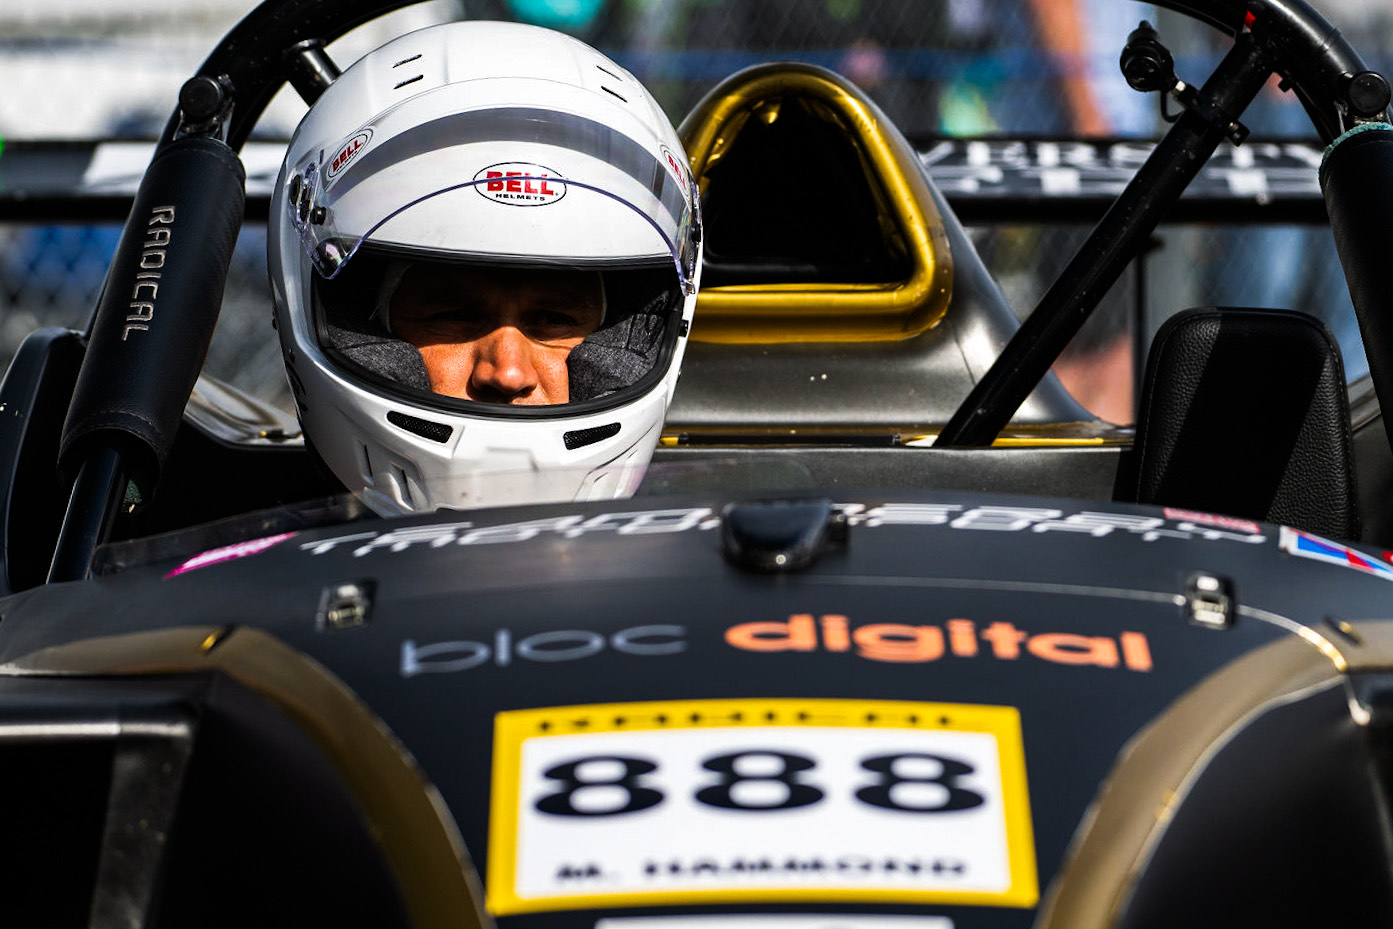 Bloc Digital enters the world of Motorsport!